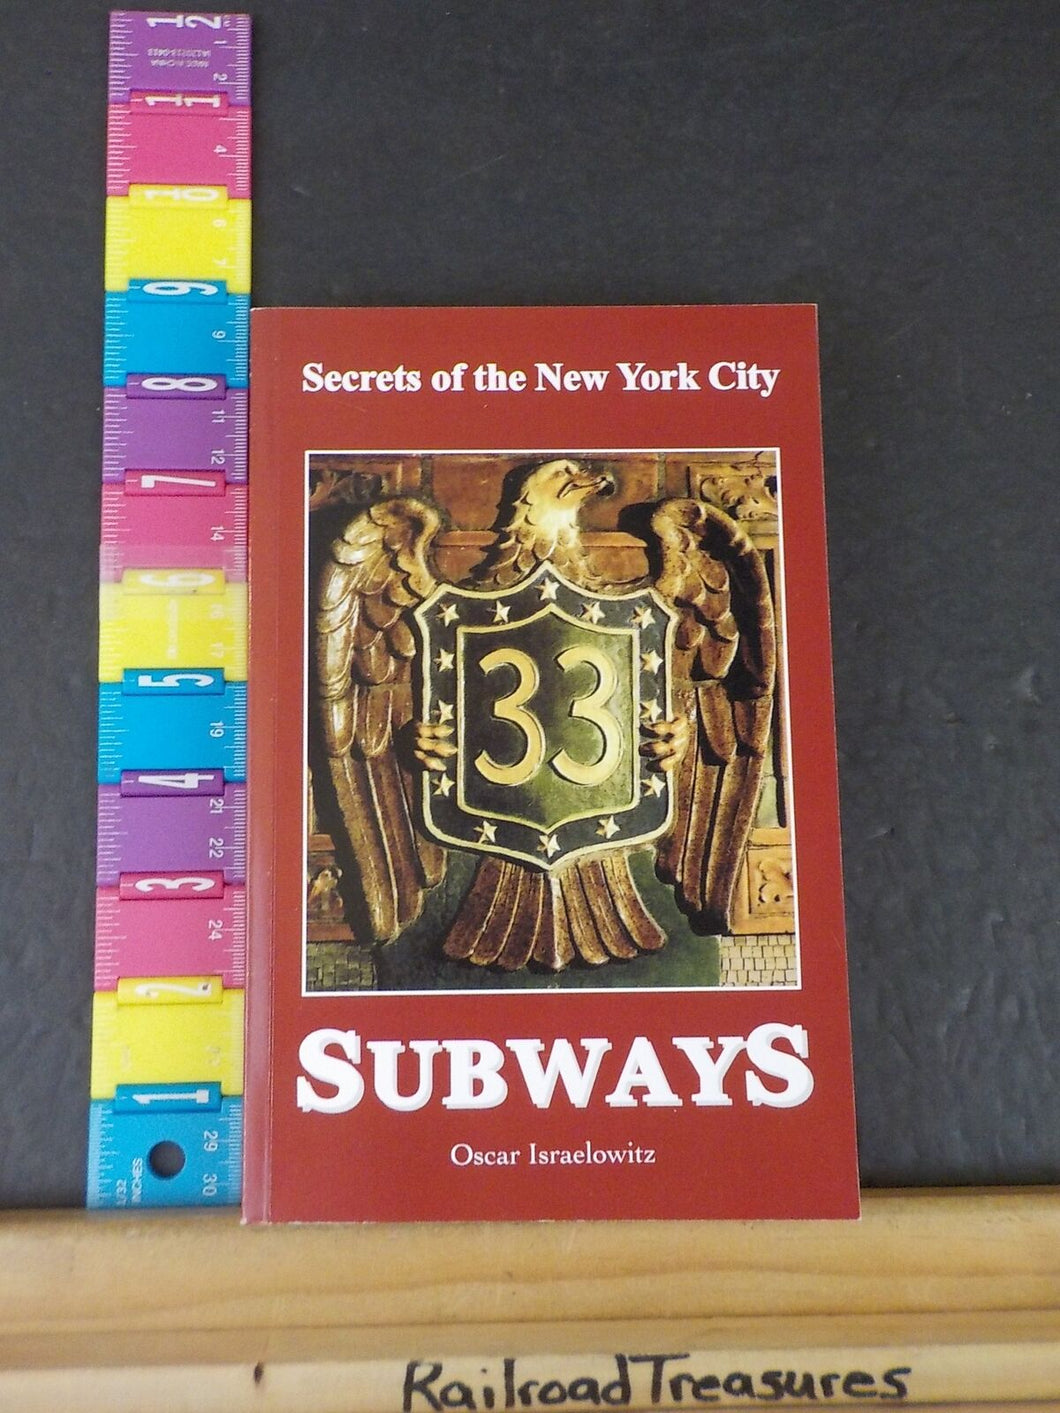 Secrets of the New York City Subways by Oscar Israelowitz